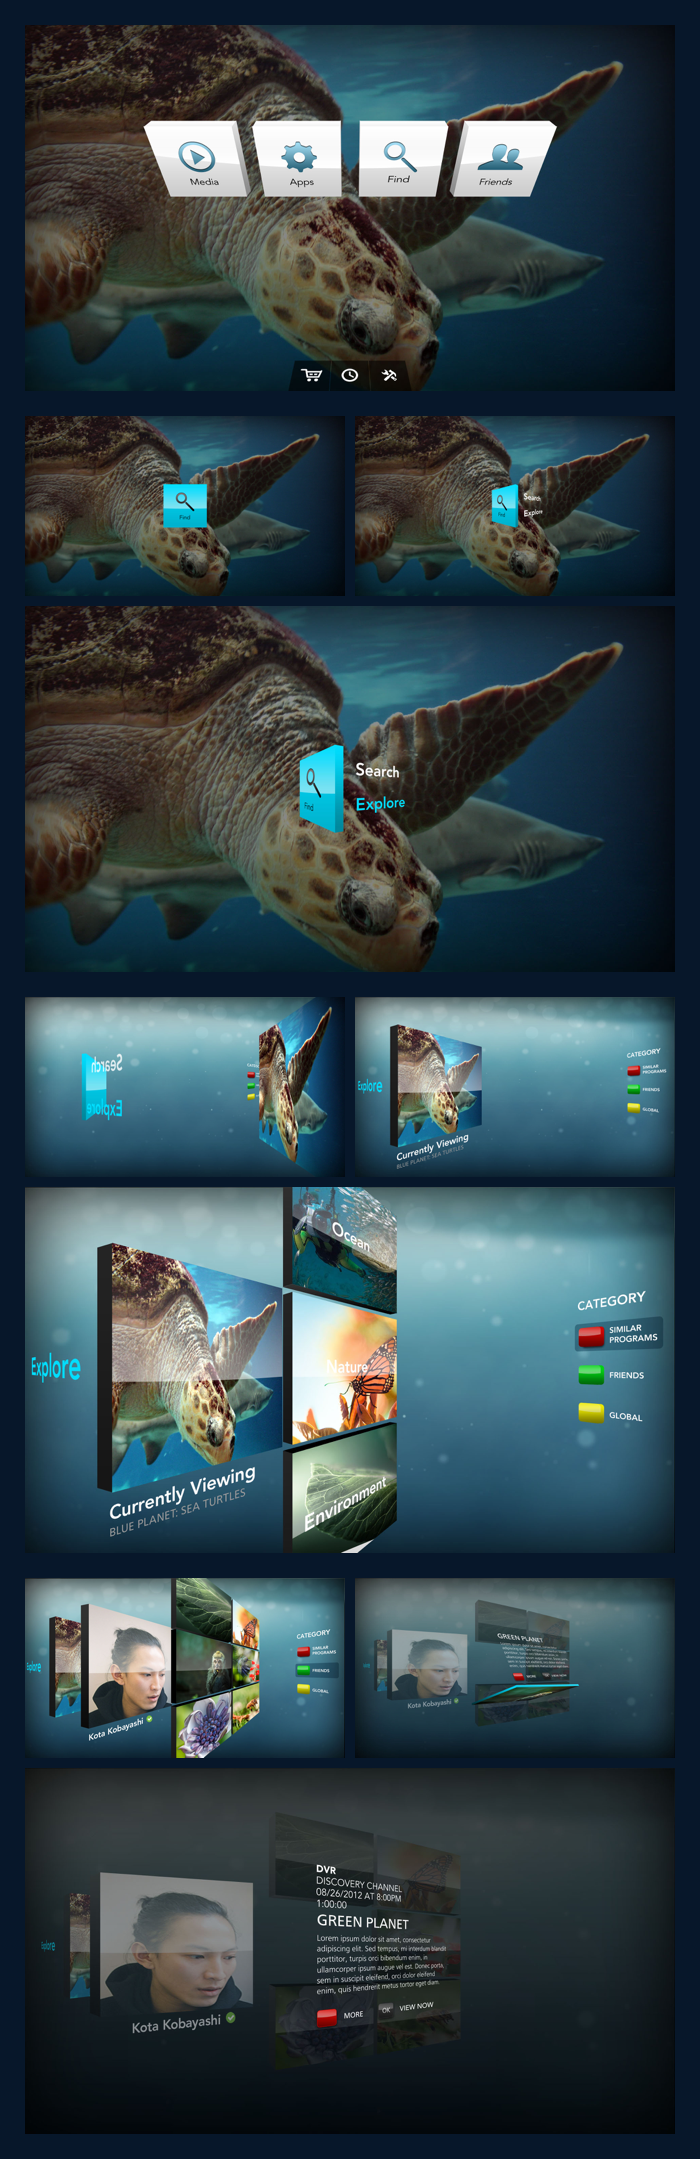 Panasonic 3DTV UI Concept